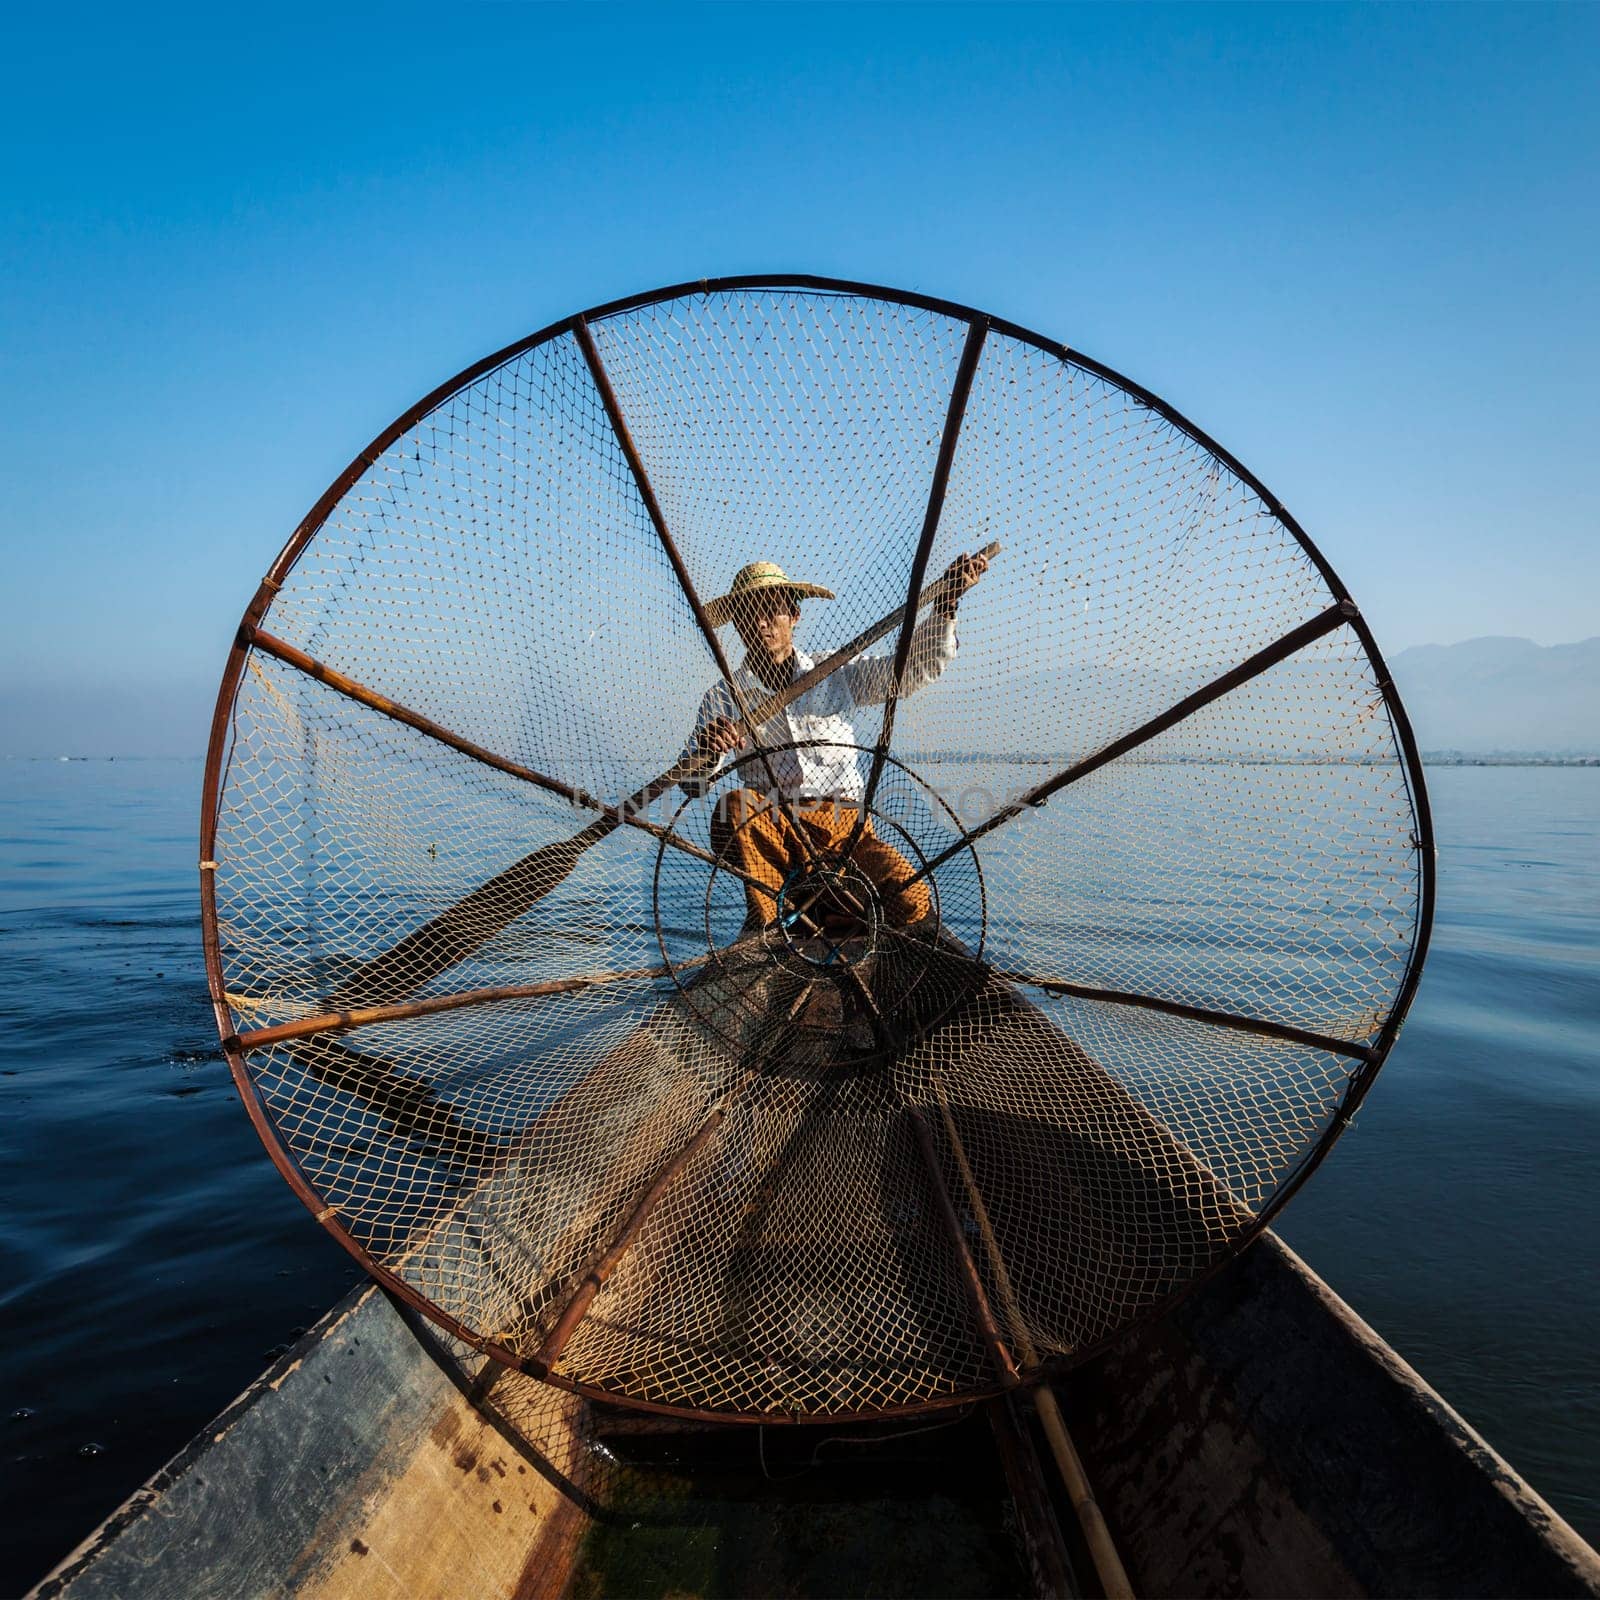 Burmese fisherman at Inle lake, Myanmar by dimol